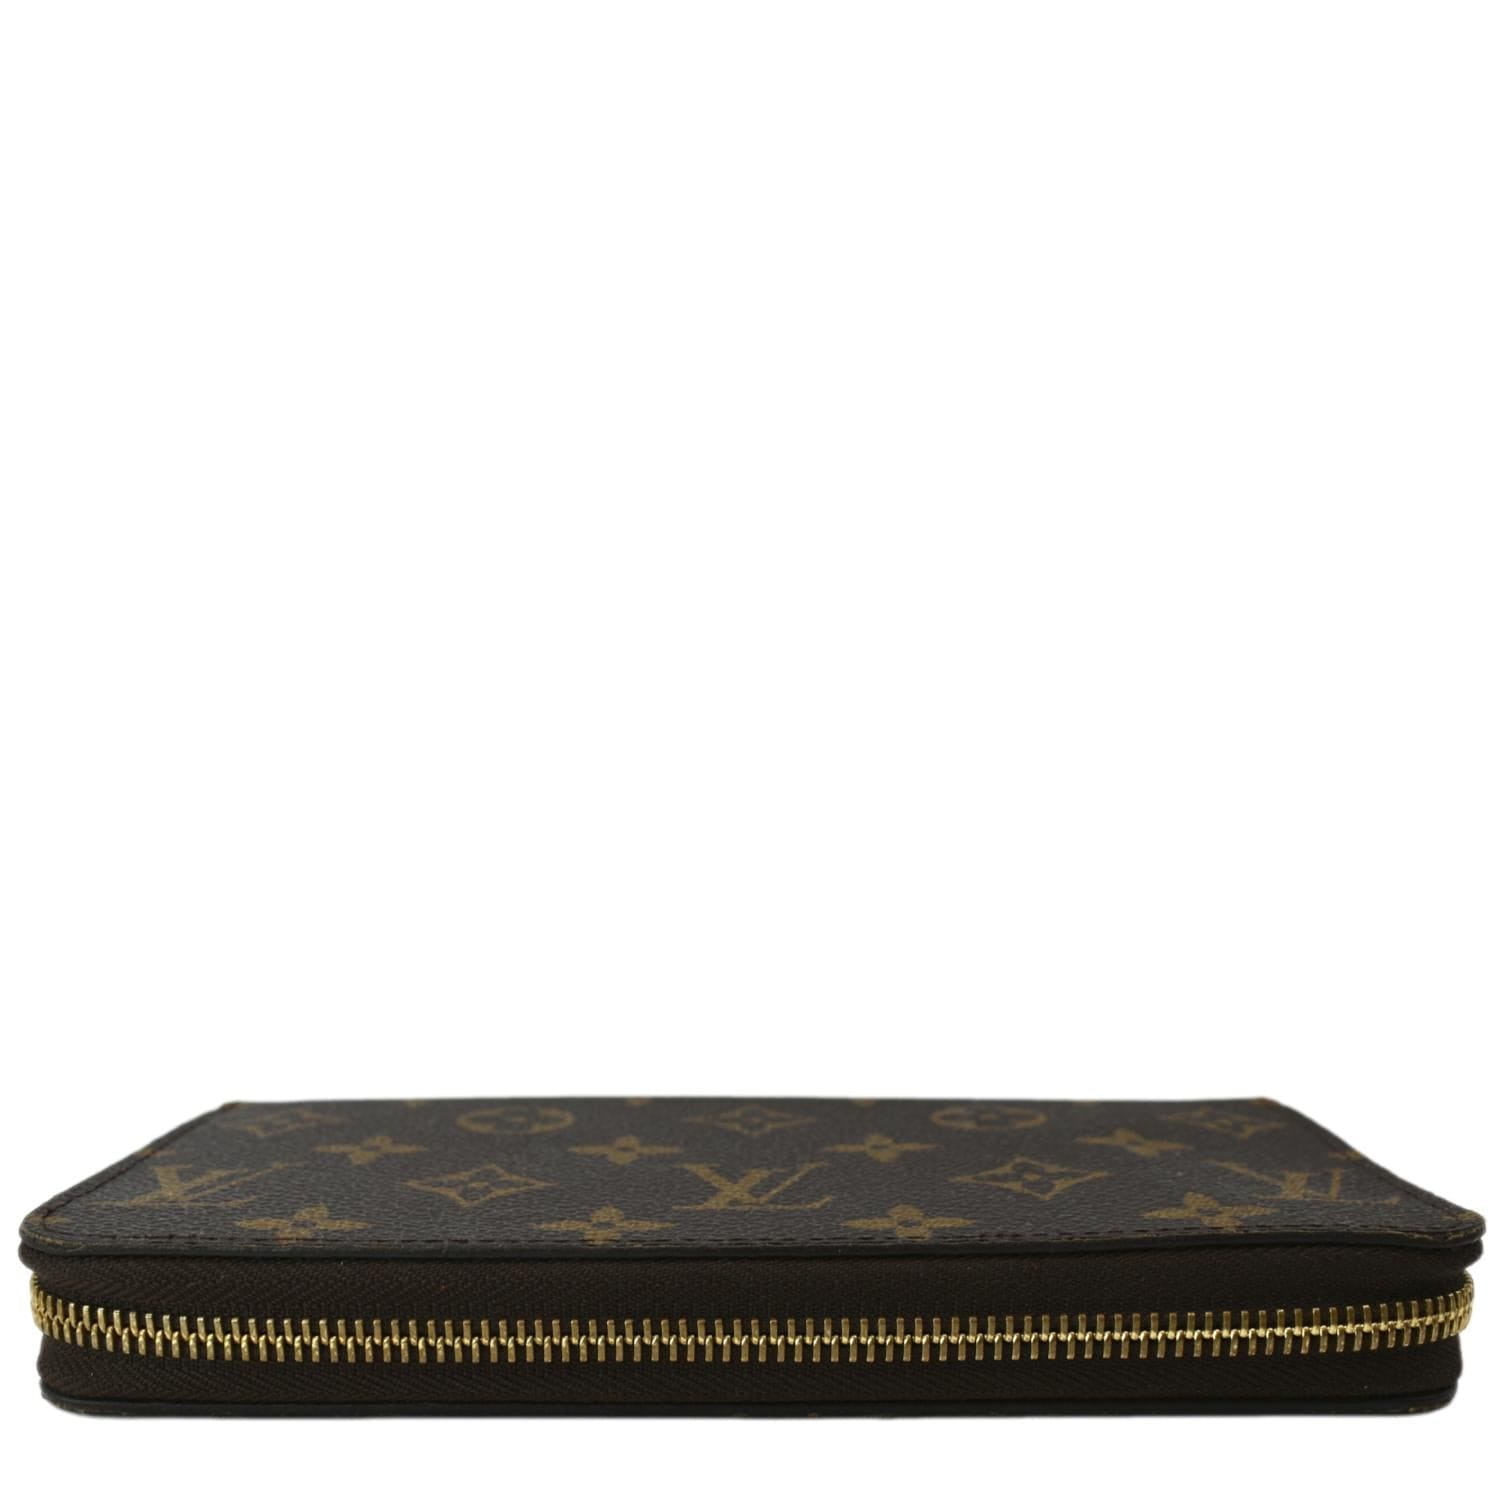 Louis Vuitton LV zip around wallet 7 1/2l 4w 3/4d 2 tone brown